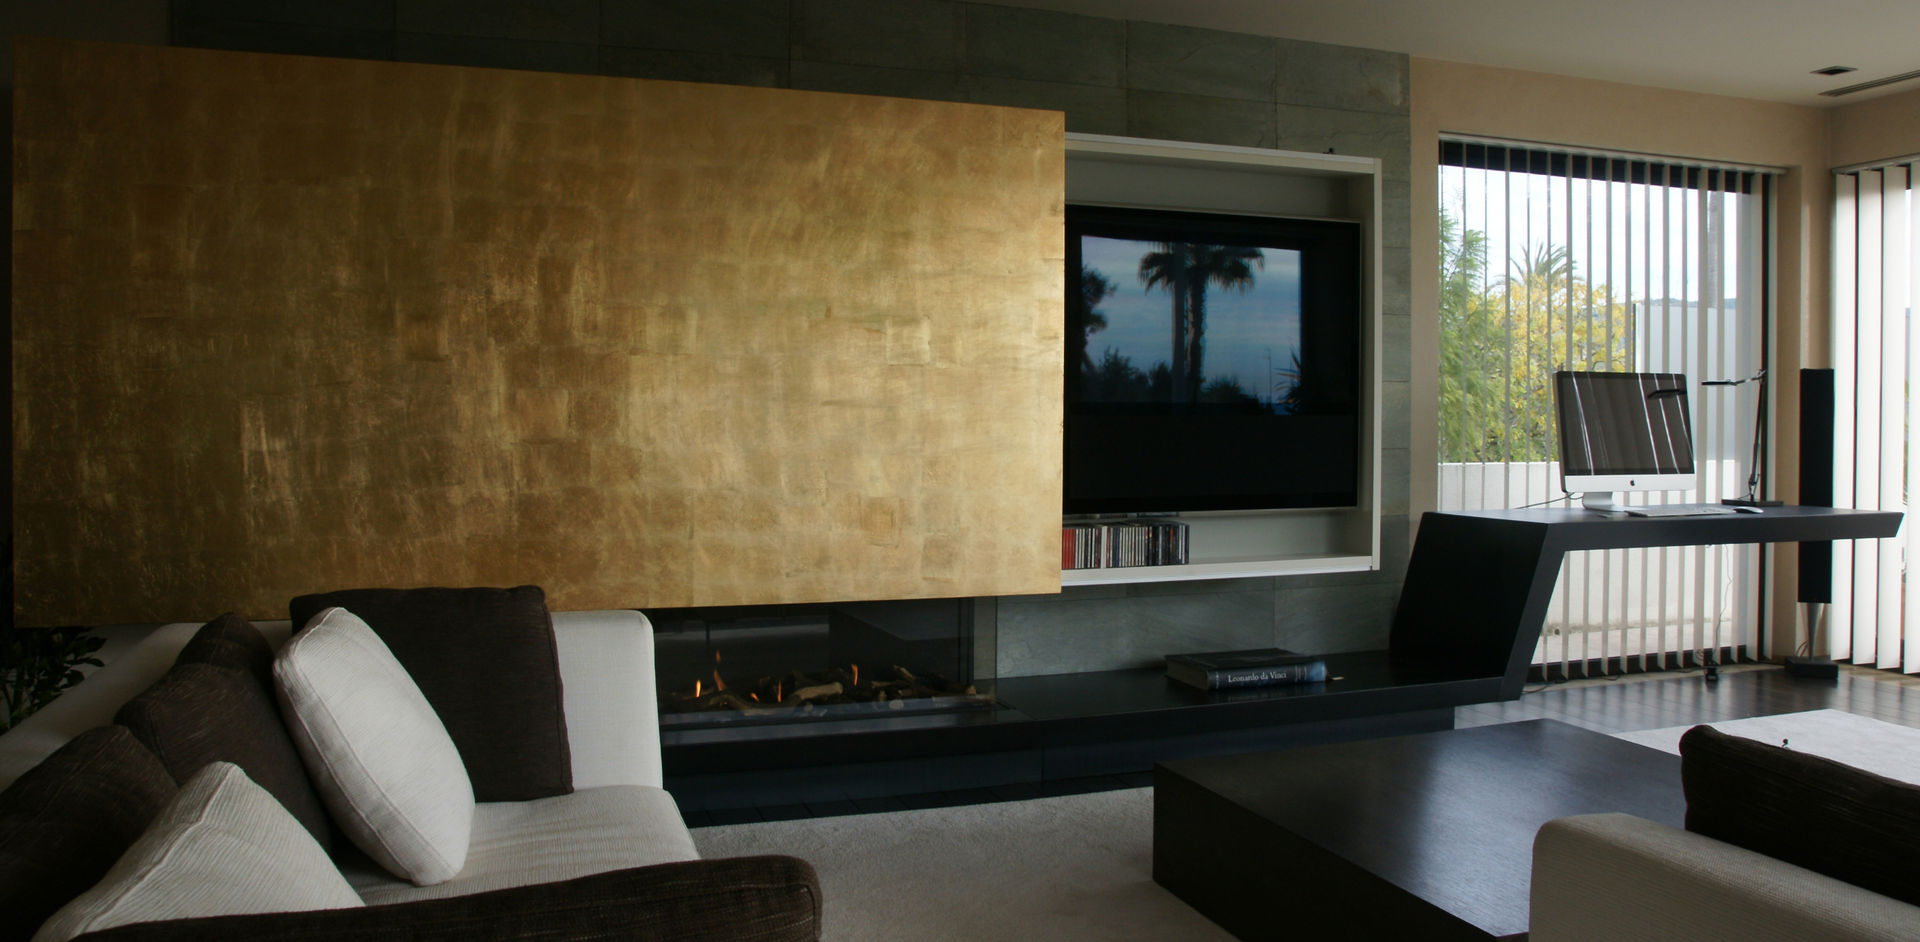 Fireplace desktop and TV set integrated. Studioapart Interior & Product design Barcelona 모던스타일 거실 tv set,fireplace,office desks